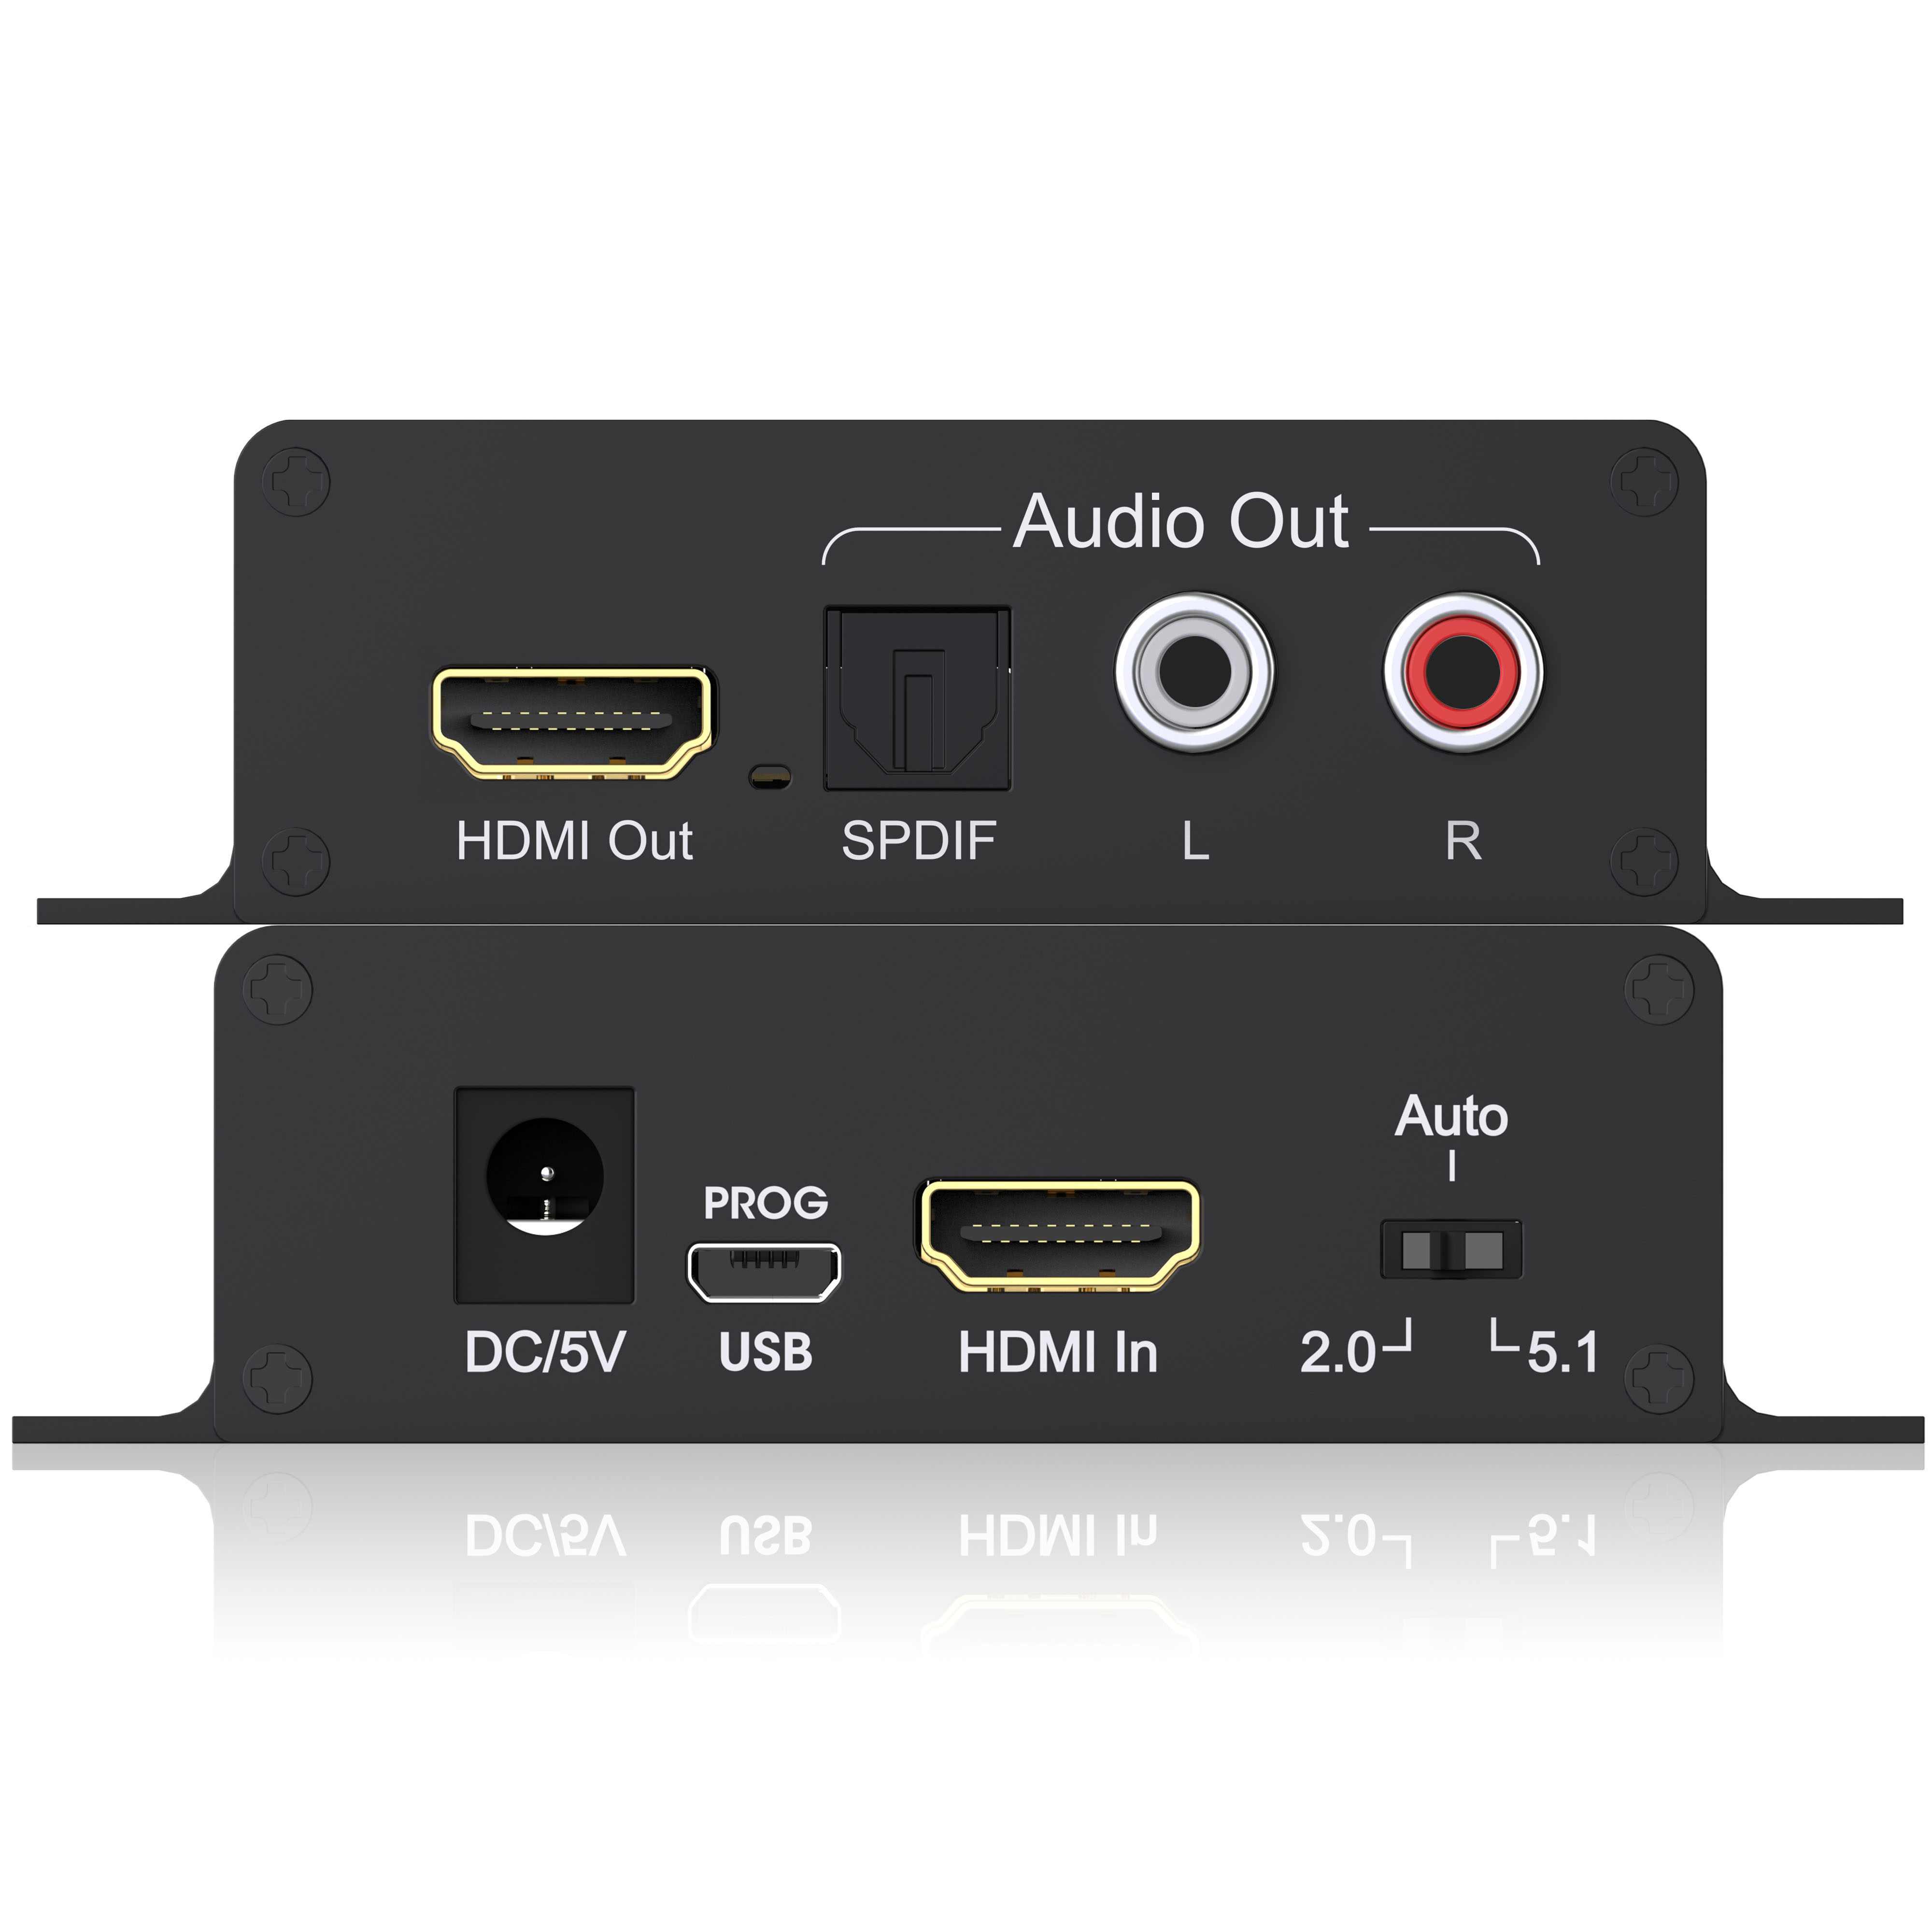 HDMI Audio Extractor - Support 4K@60Hz 4:4:4